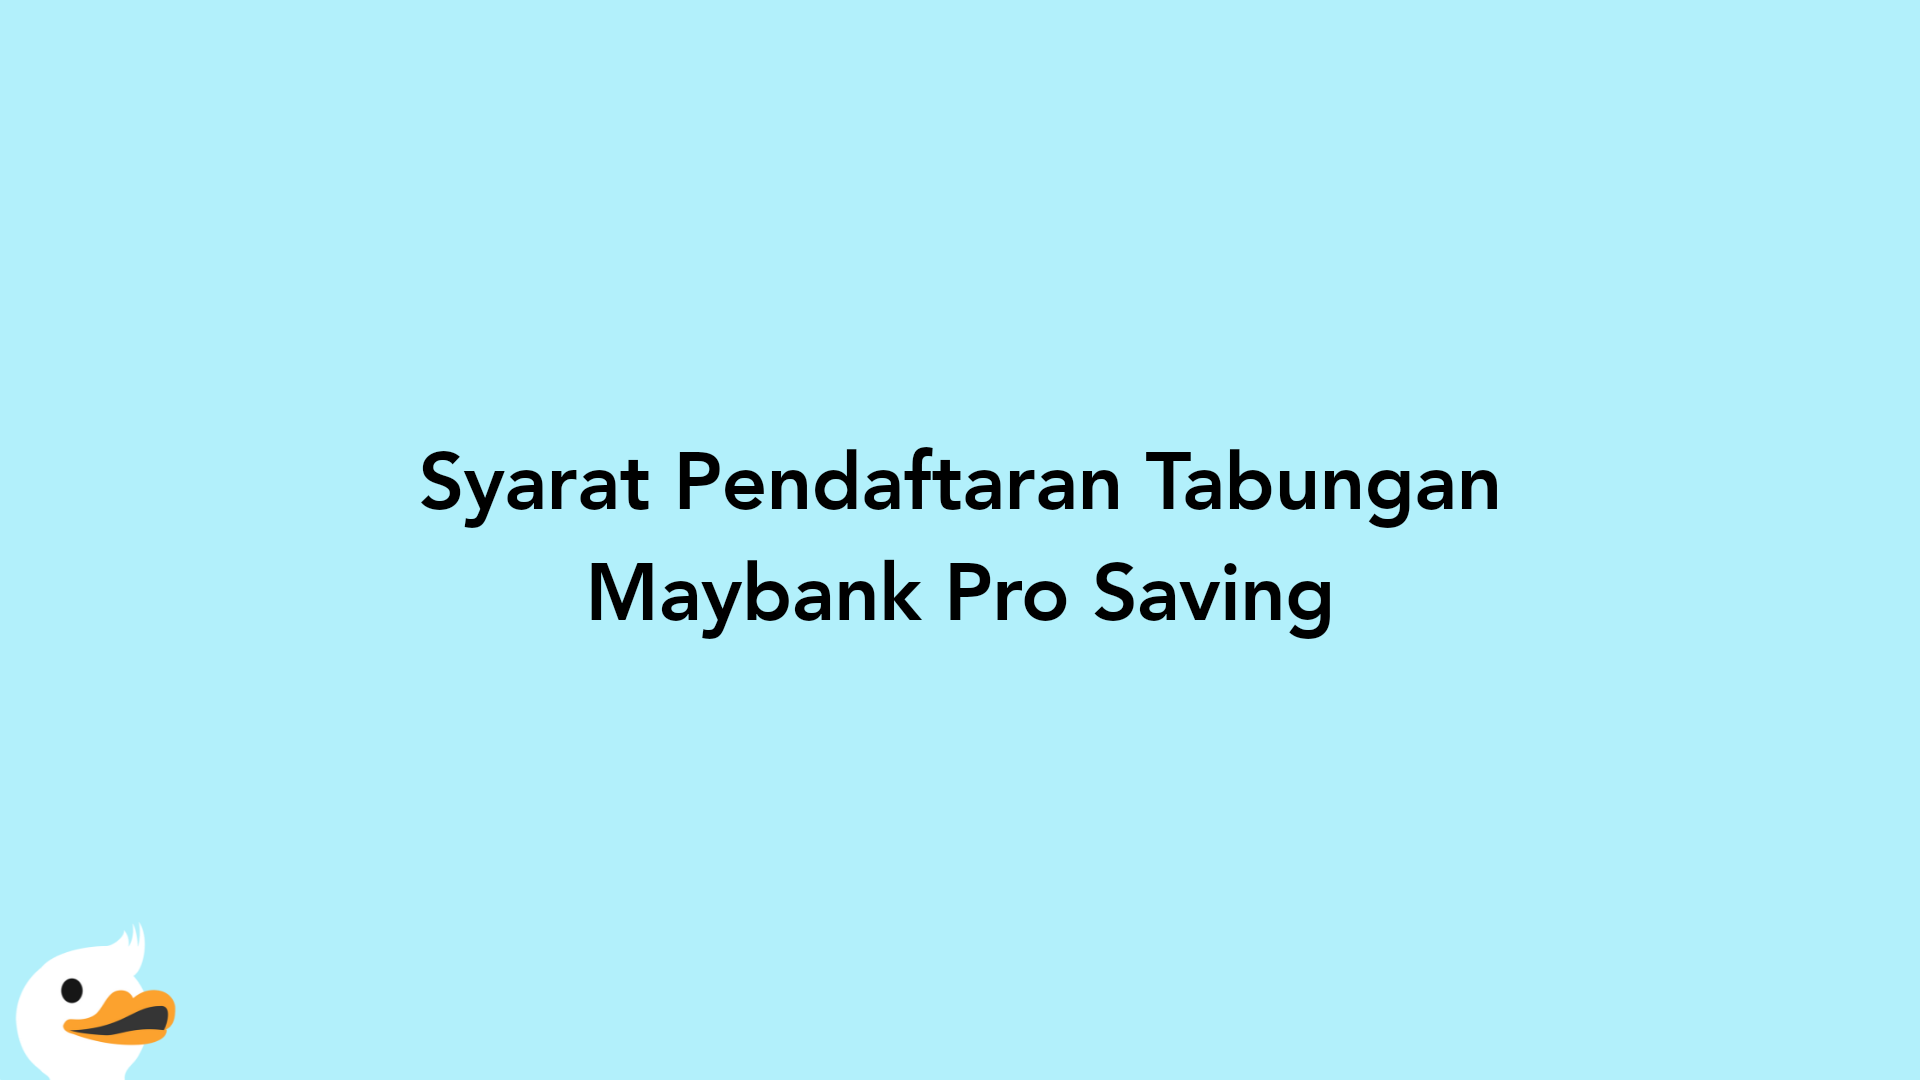 Syarat Pendaftaran Tabungan Maybank Pro Saving